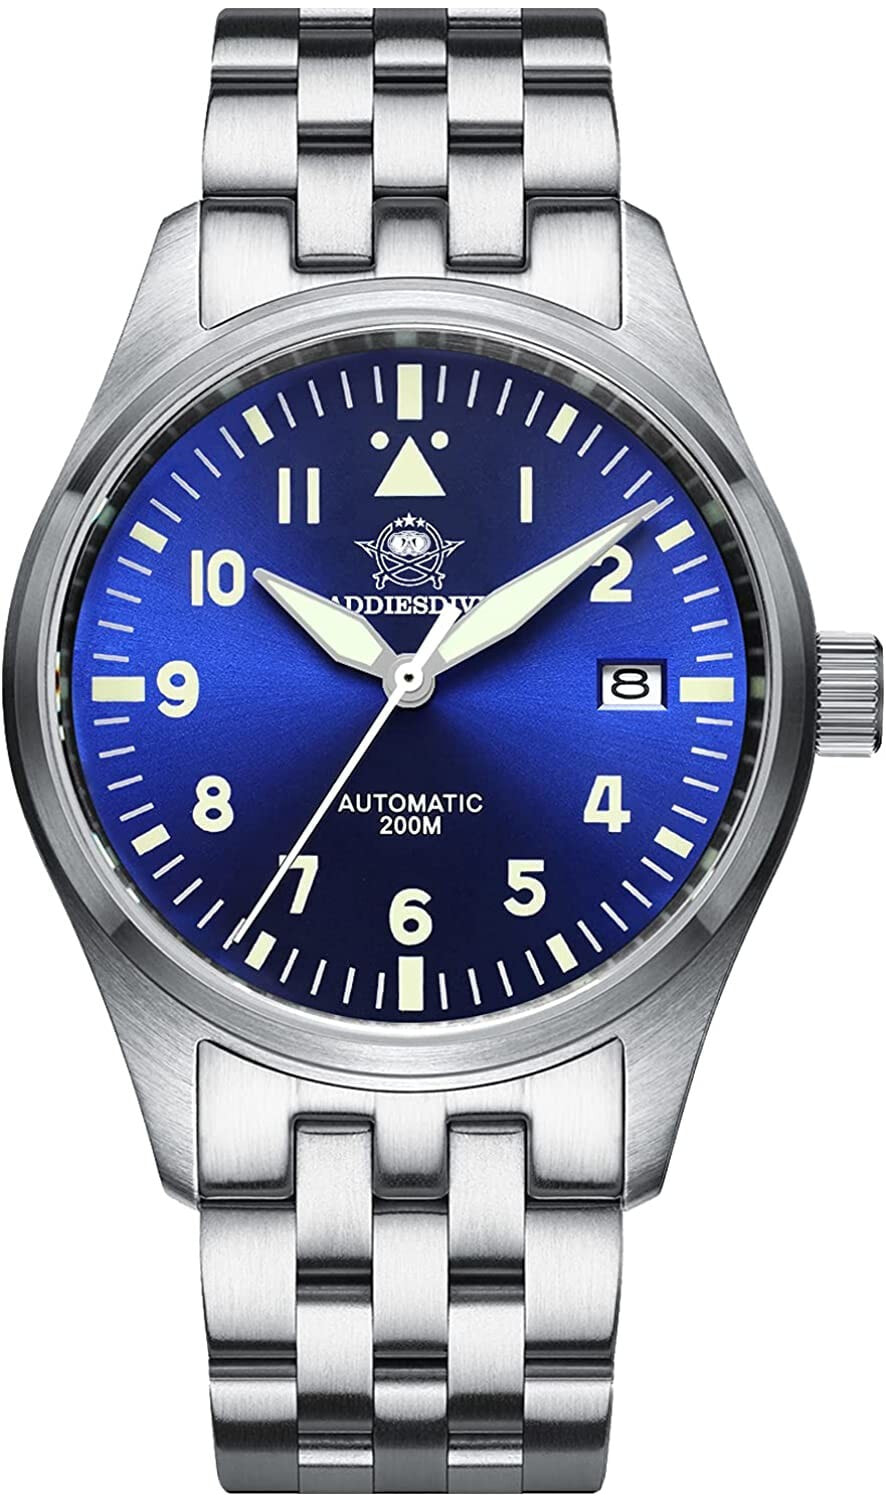 Мужские наручные часы с серебряным браслетом ADDIESDIVE Men's watch brand watch aviator NH35A automatic watch H2